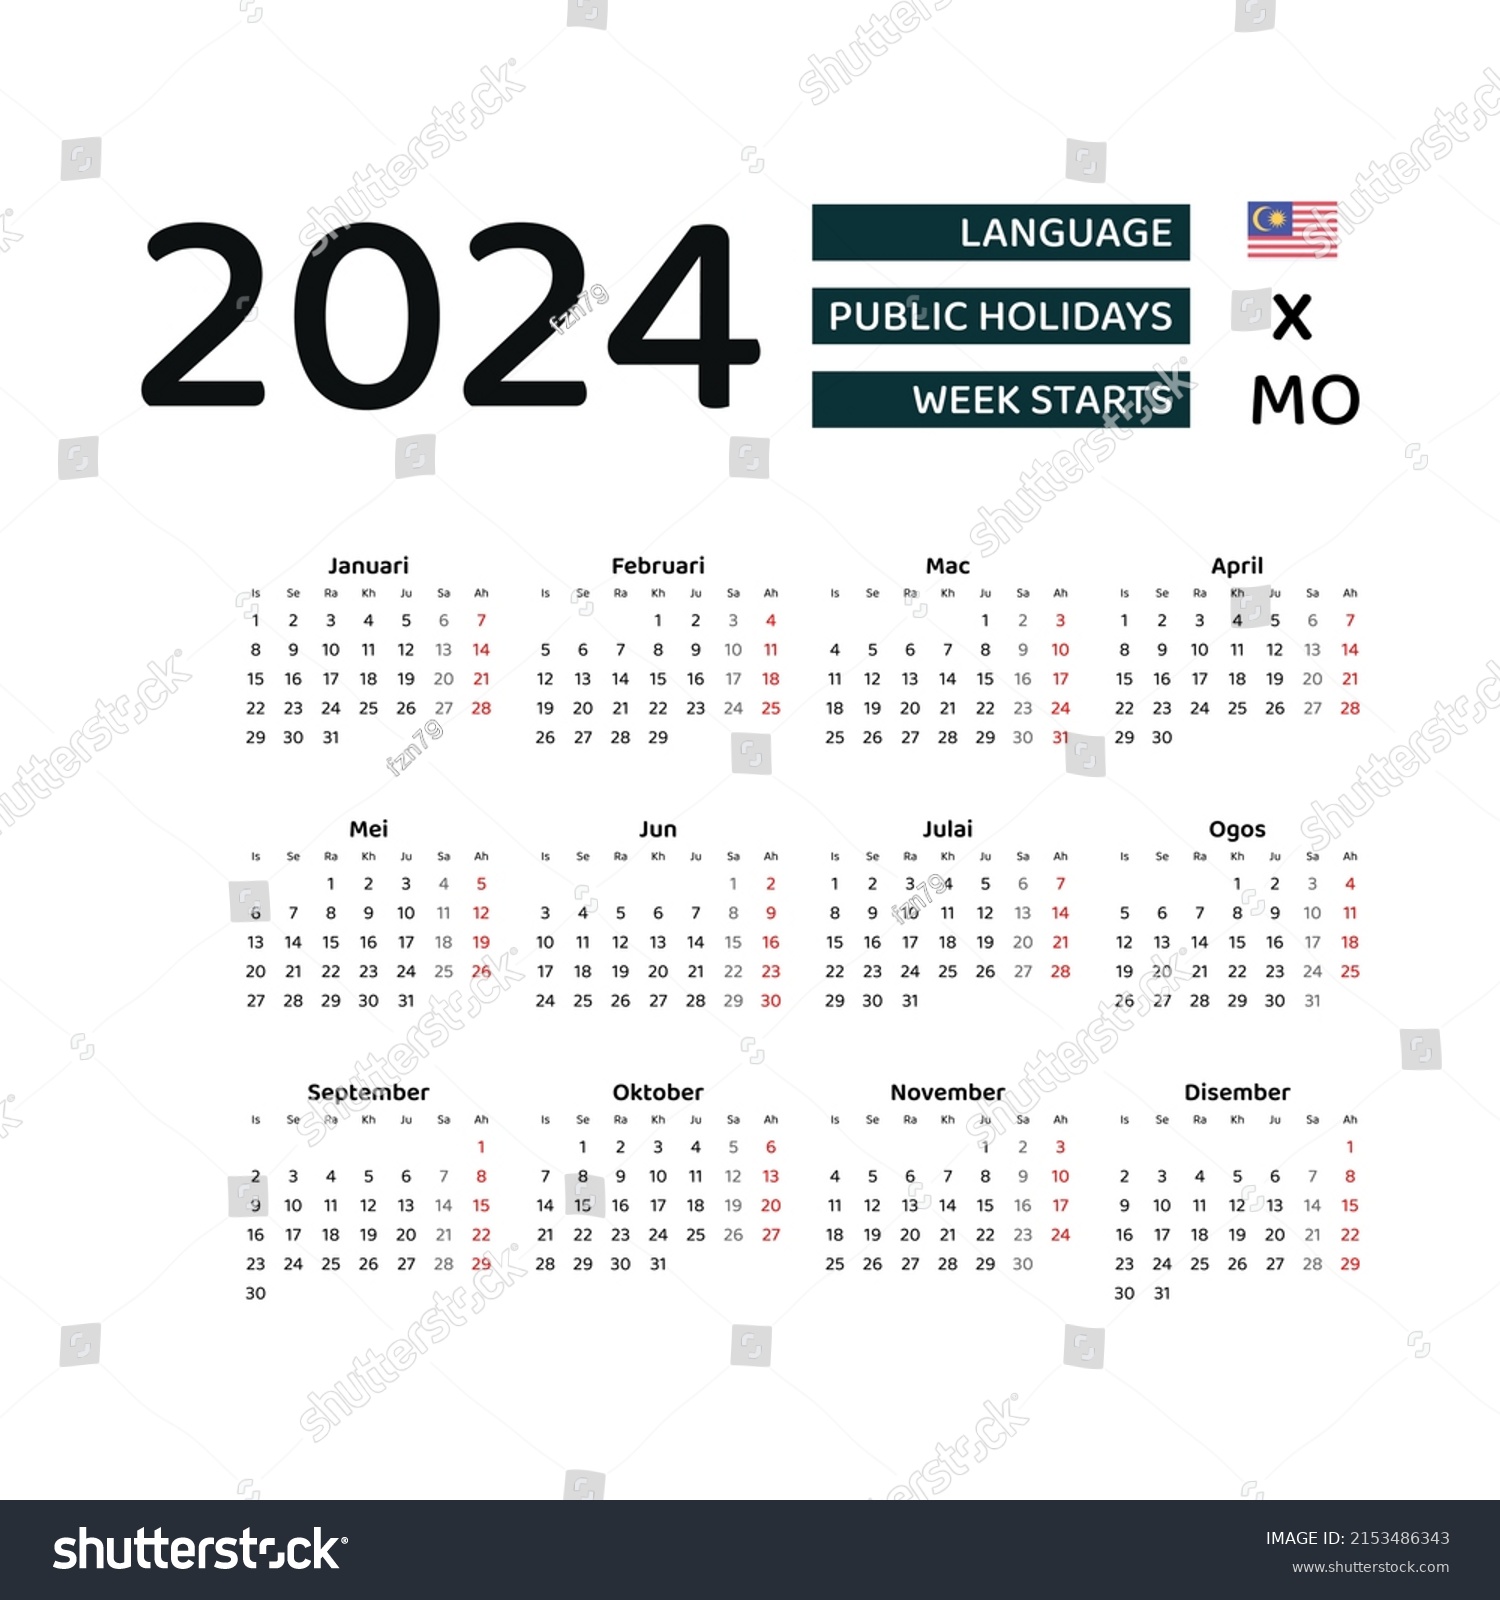 Calendario 2024 Oficial Cool Awasome Review of School Calendar Dates 2024